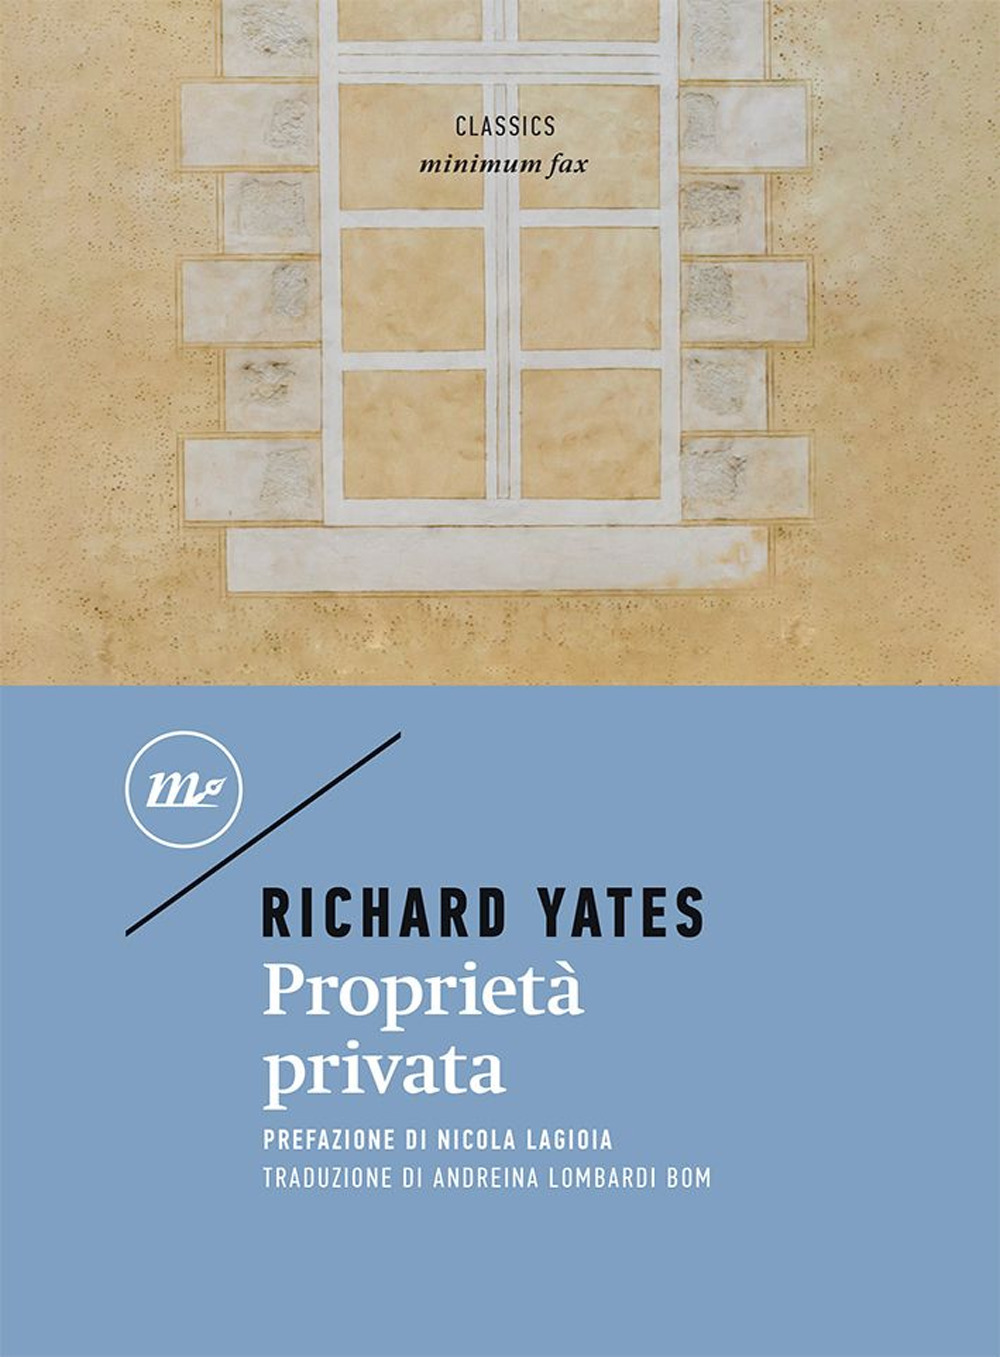 Proprietà privata - Richard Yates - Minimum Fax